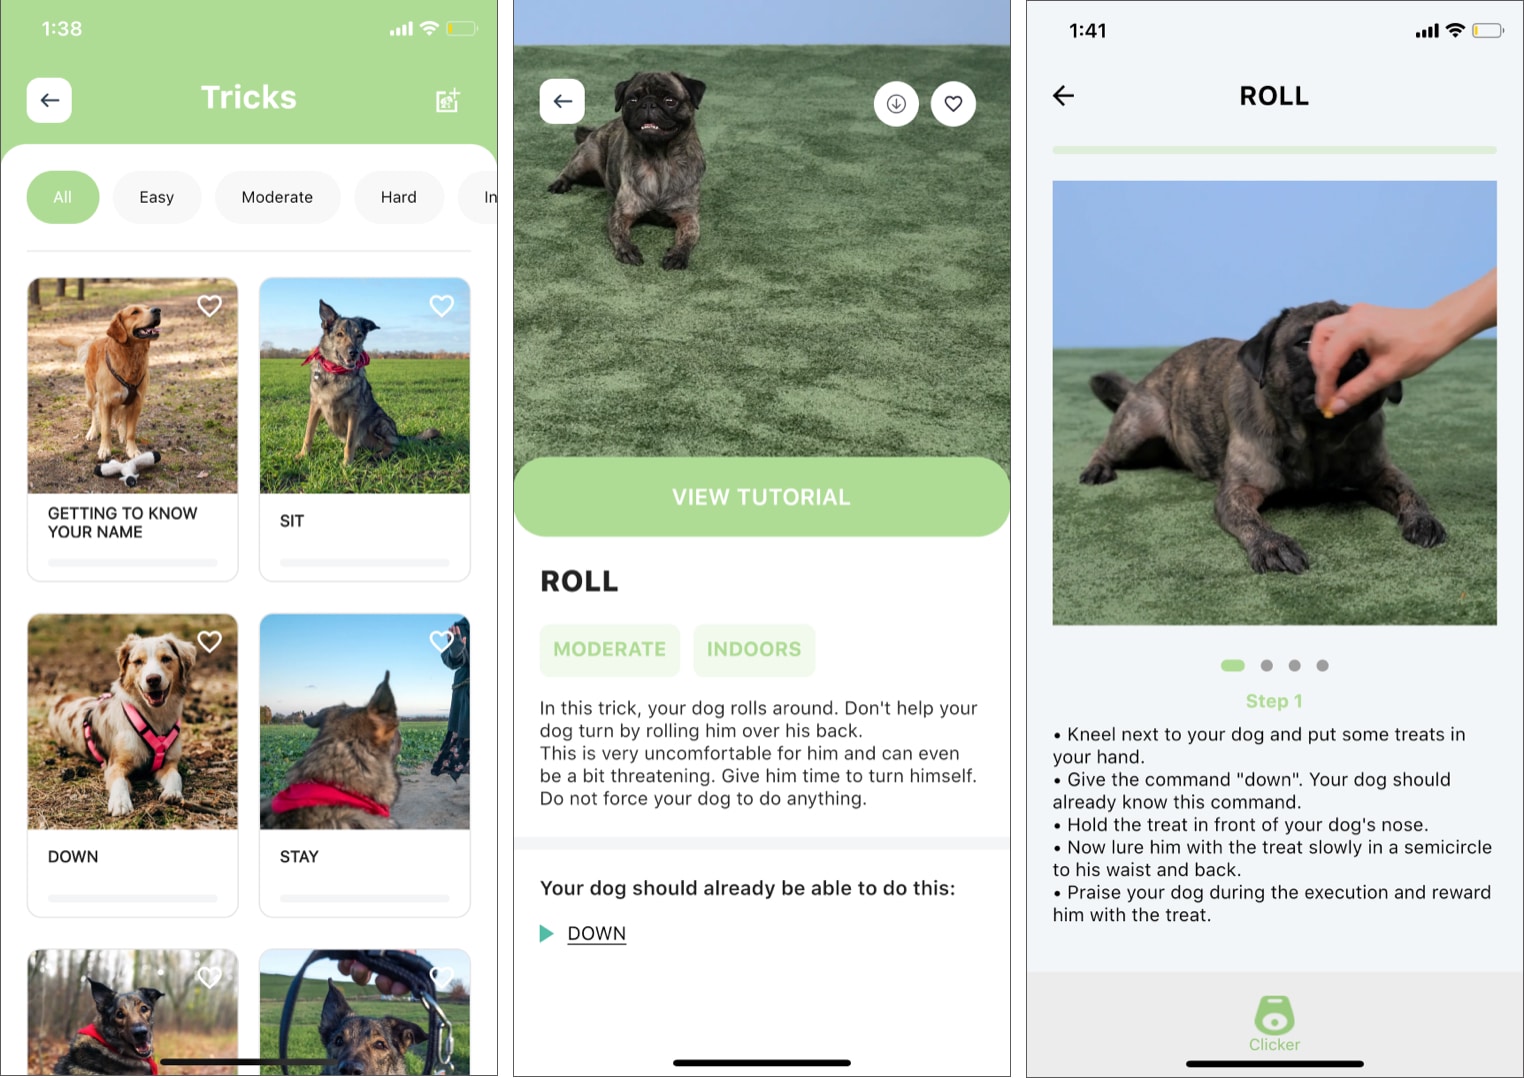 Hundeo dog training app offers many trick tutorials